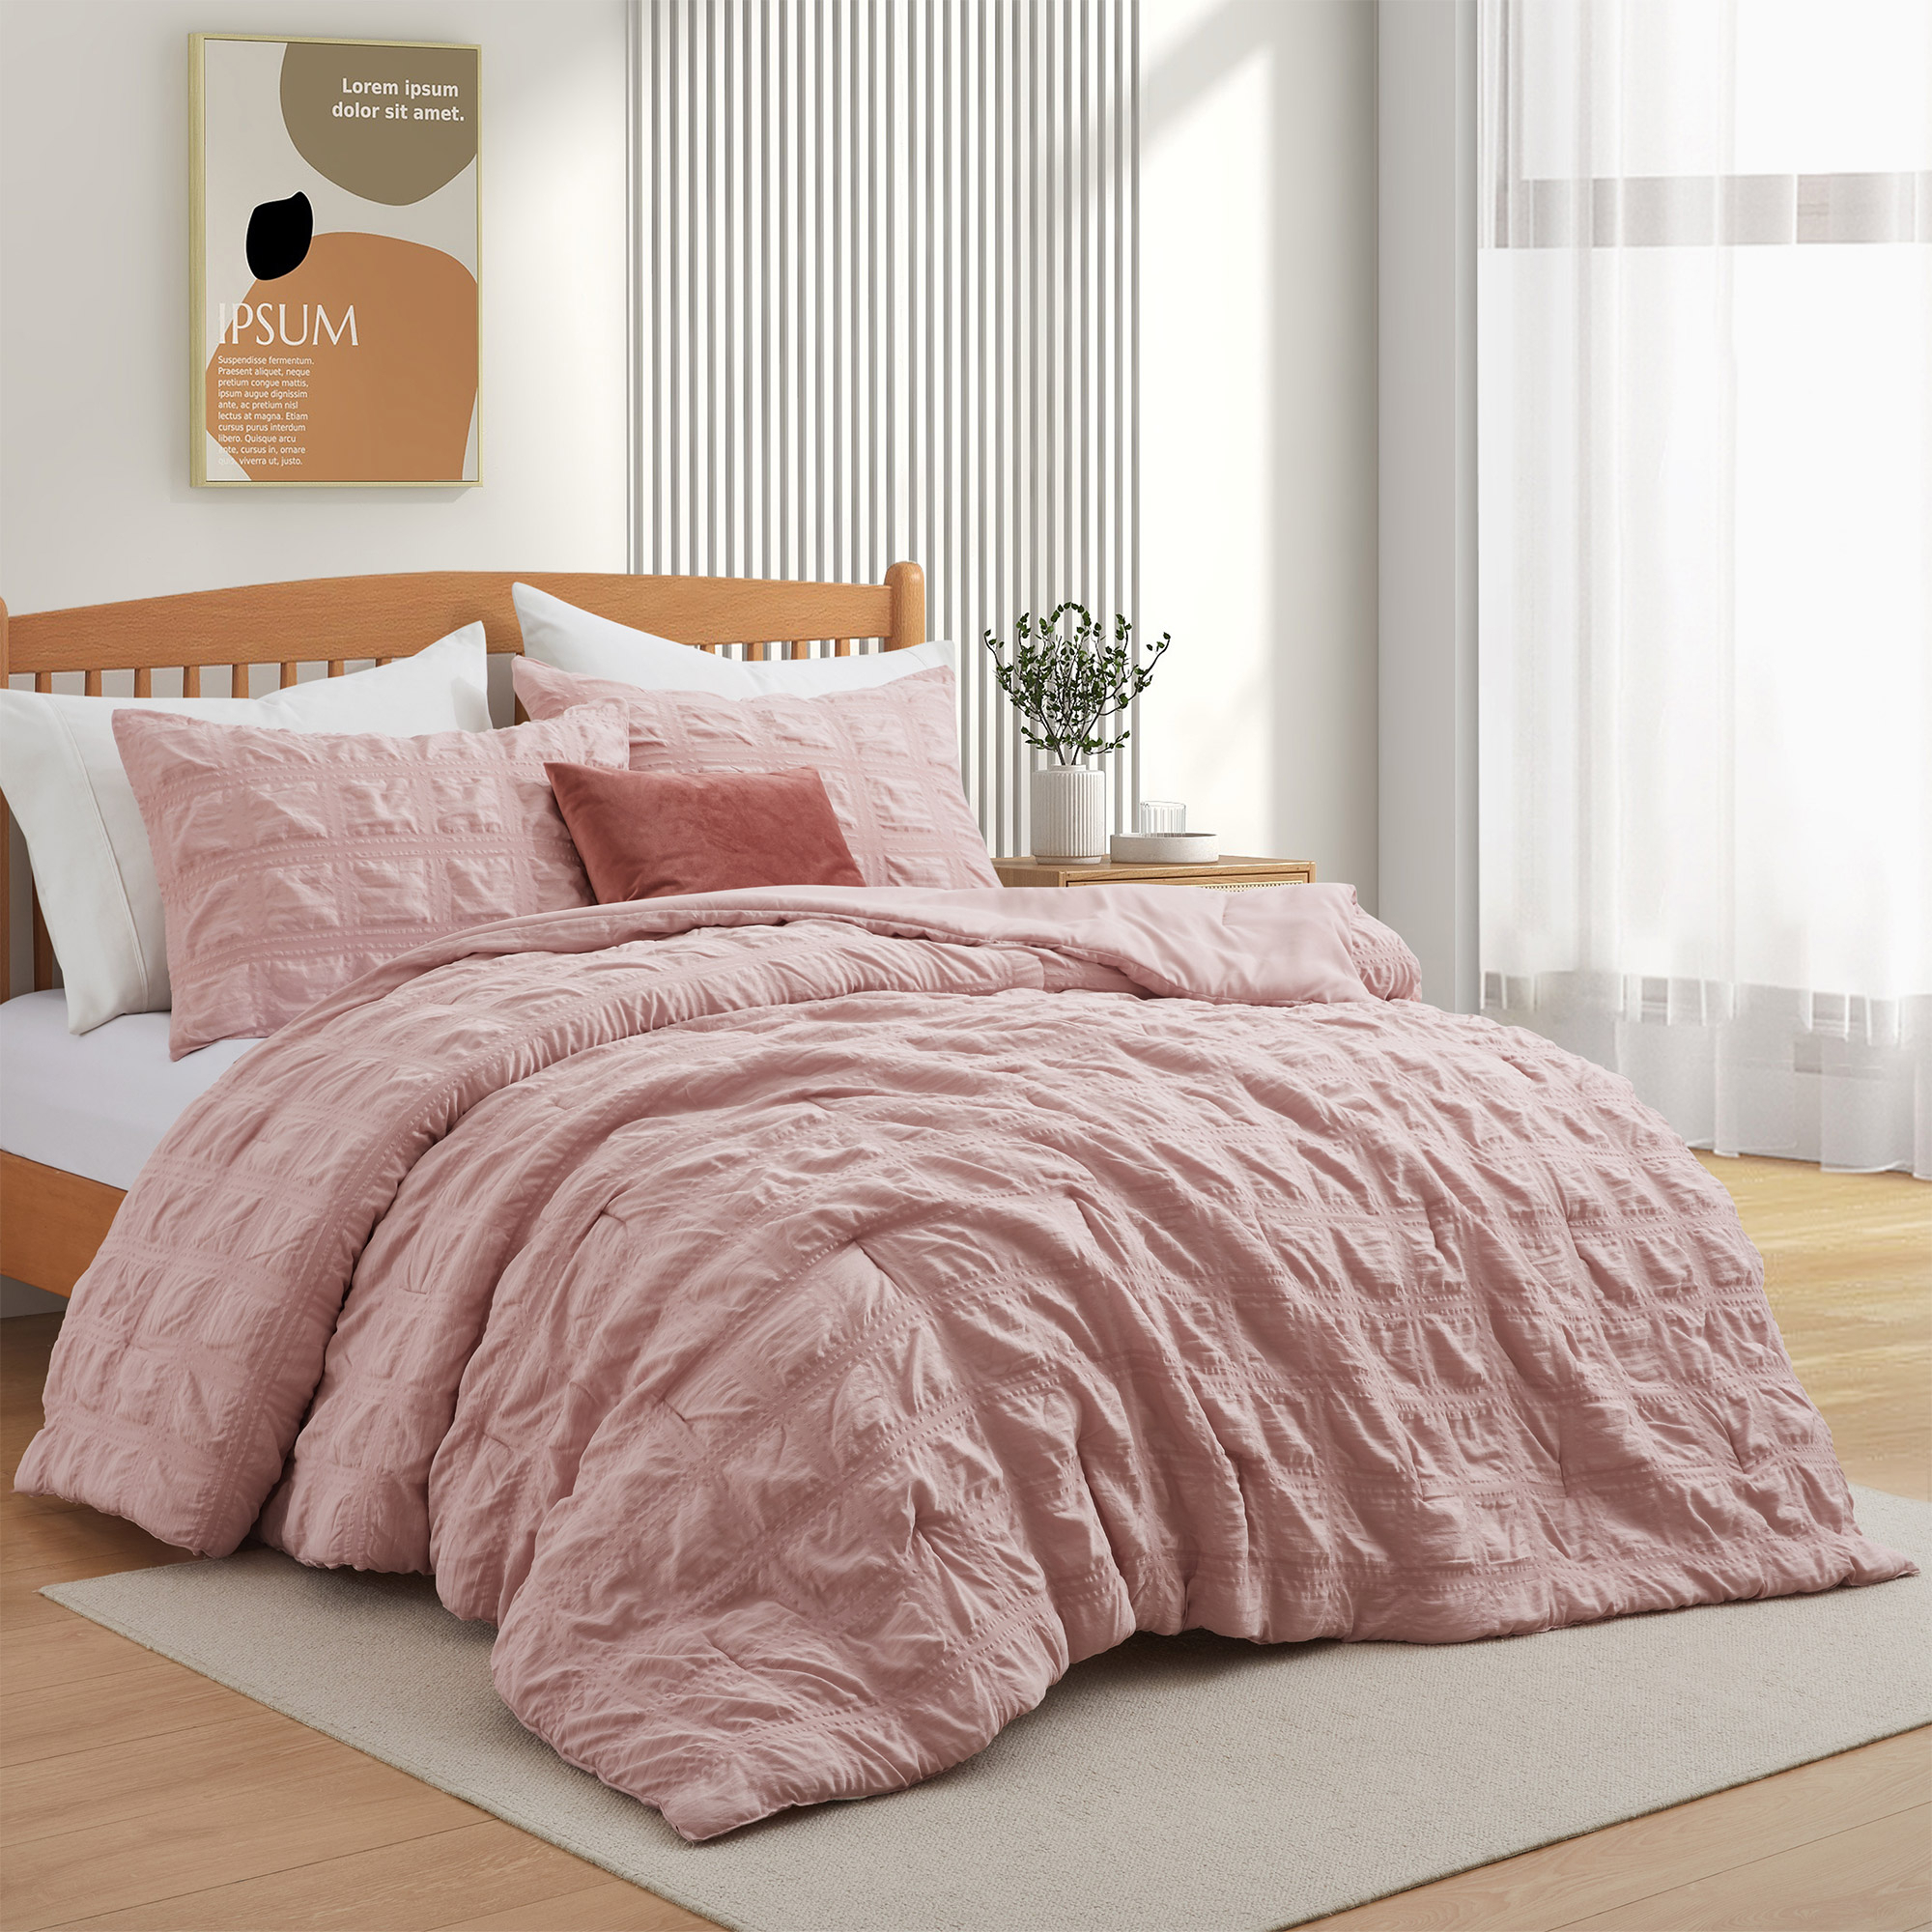 All Season Crinkle Textured Down Alternative Comforter Set-Seersucker Bedding Set - Gray, King